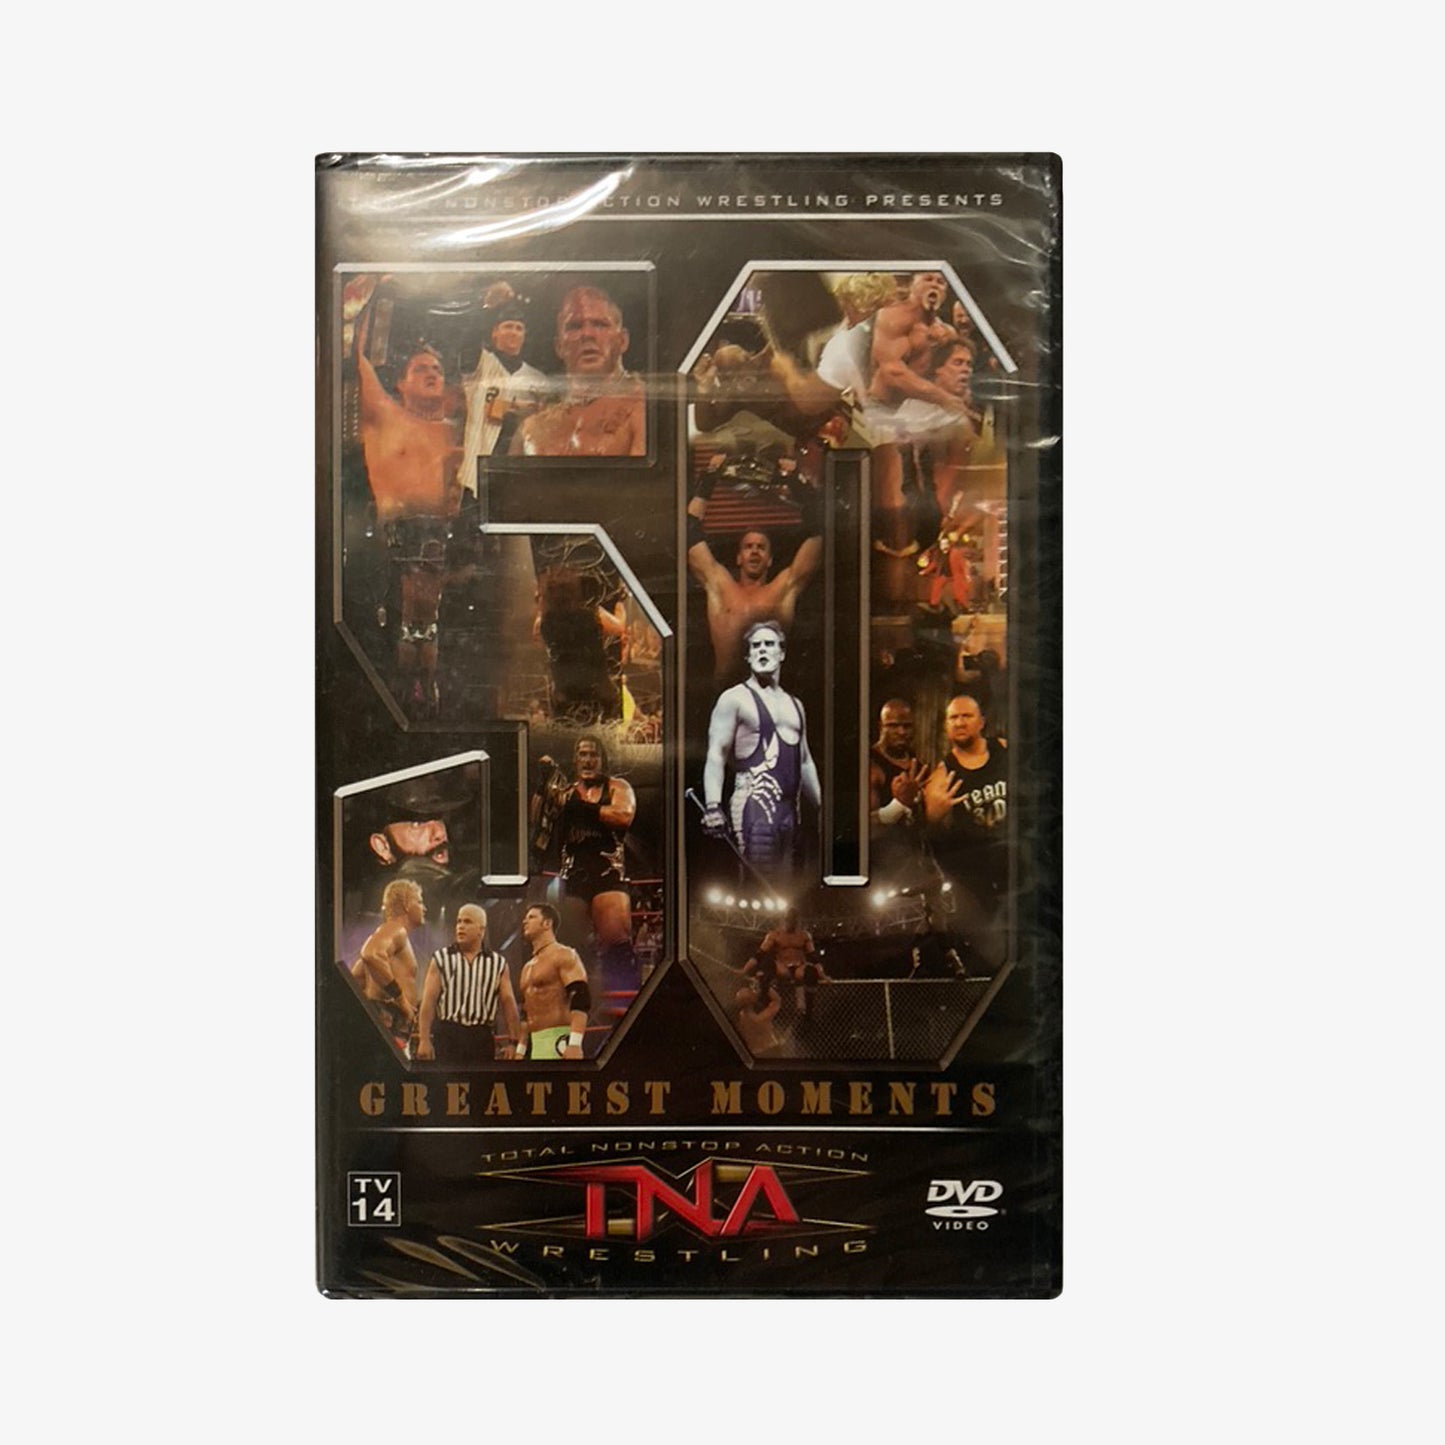 TNA Wrestling 50 Greatest Moments DVD from Fightabilia.com